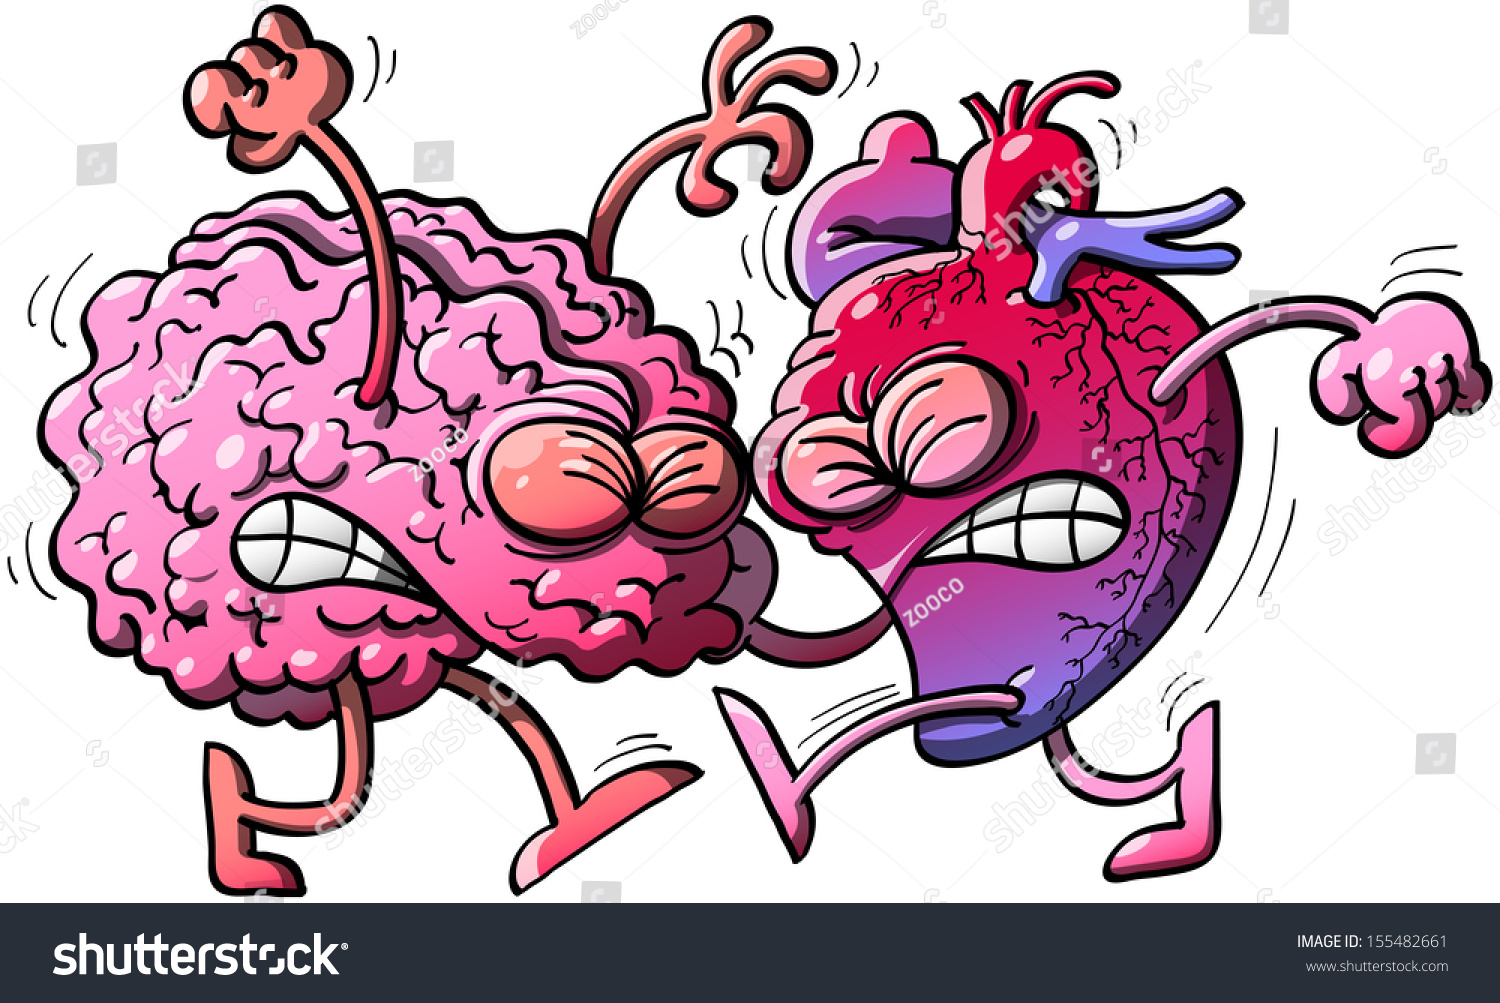 Heart and brain. Мозг и сердце. Борьба мозга и сердца. Мозг и сердце дерутся. Мозг vs сердце.